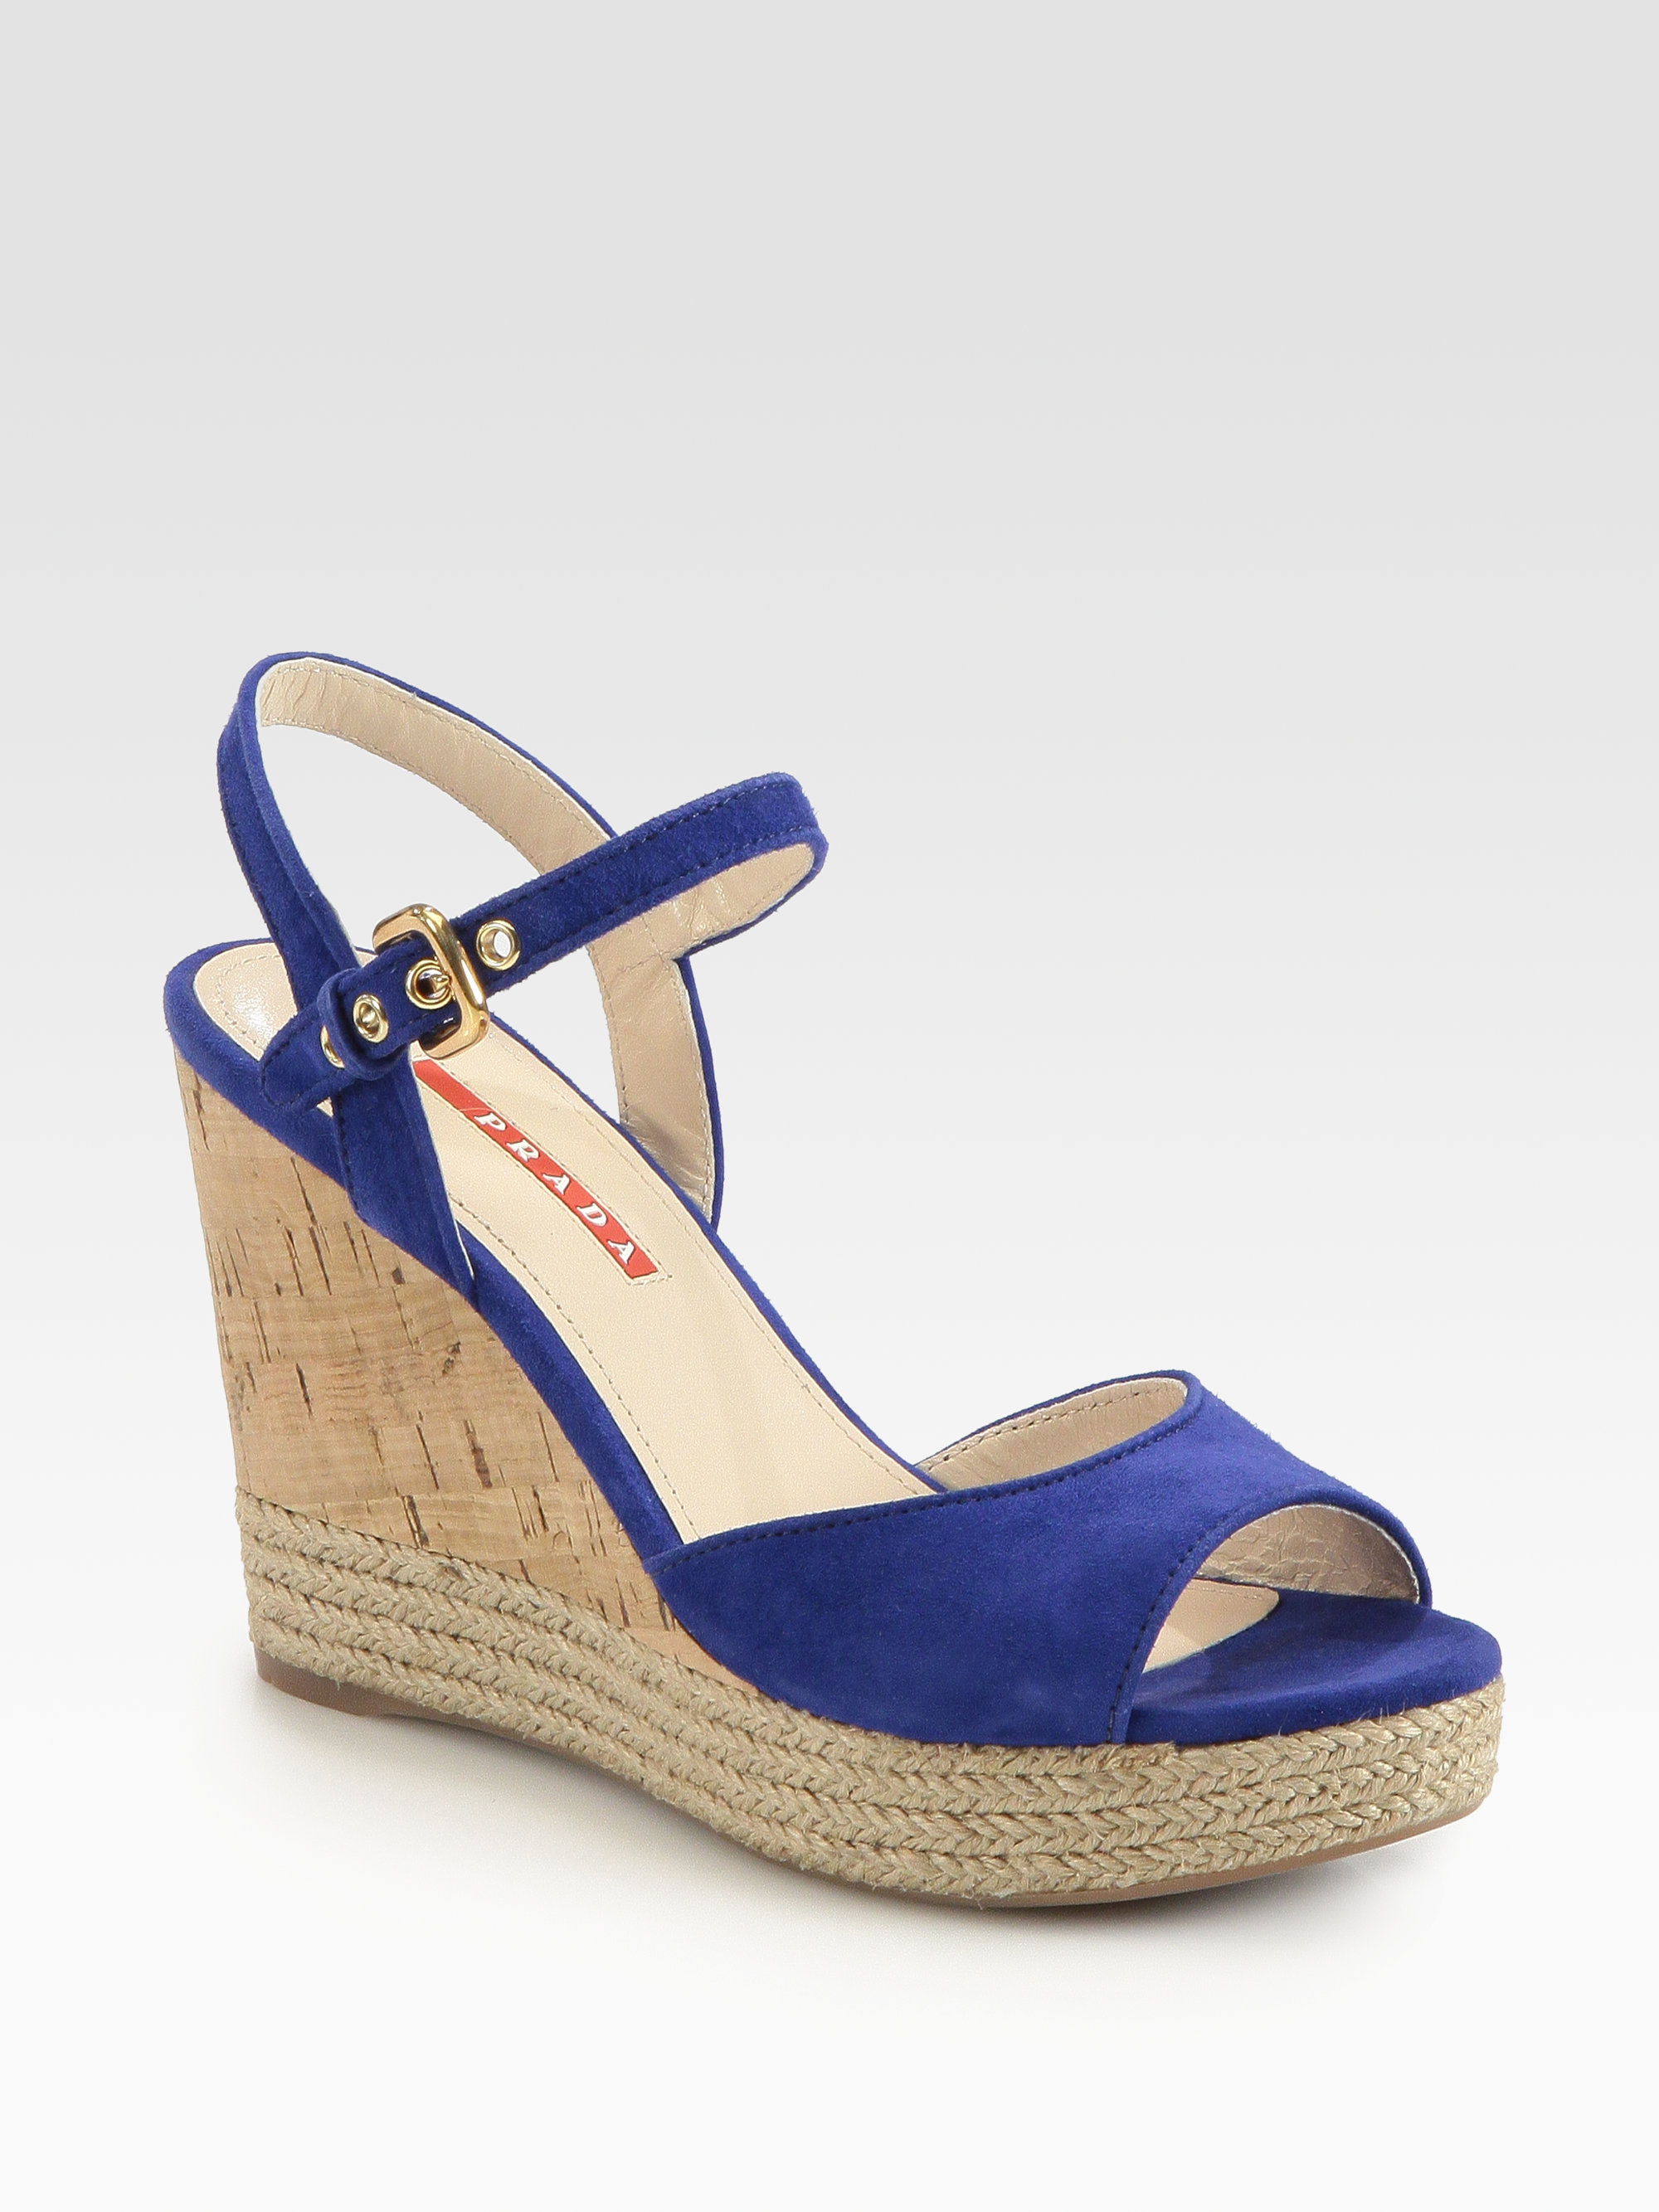 Prada Suede Cork Wedge Sandals in Blue - Lyst